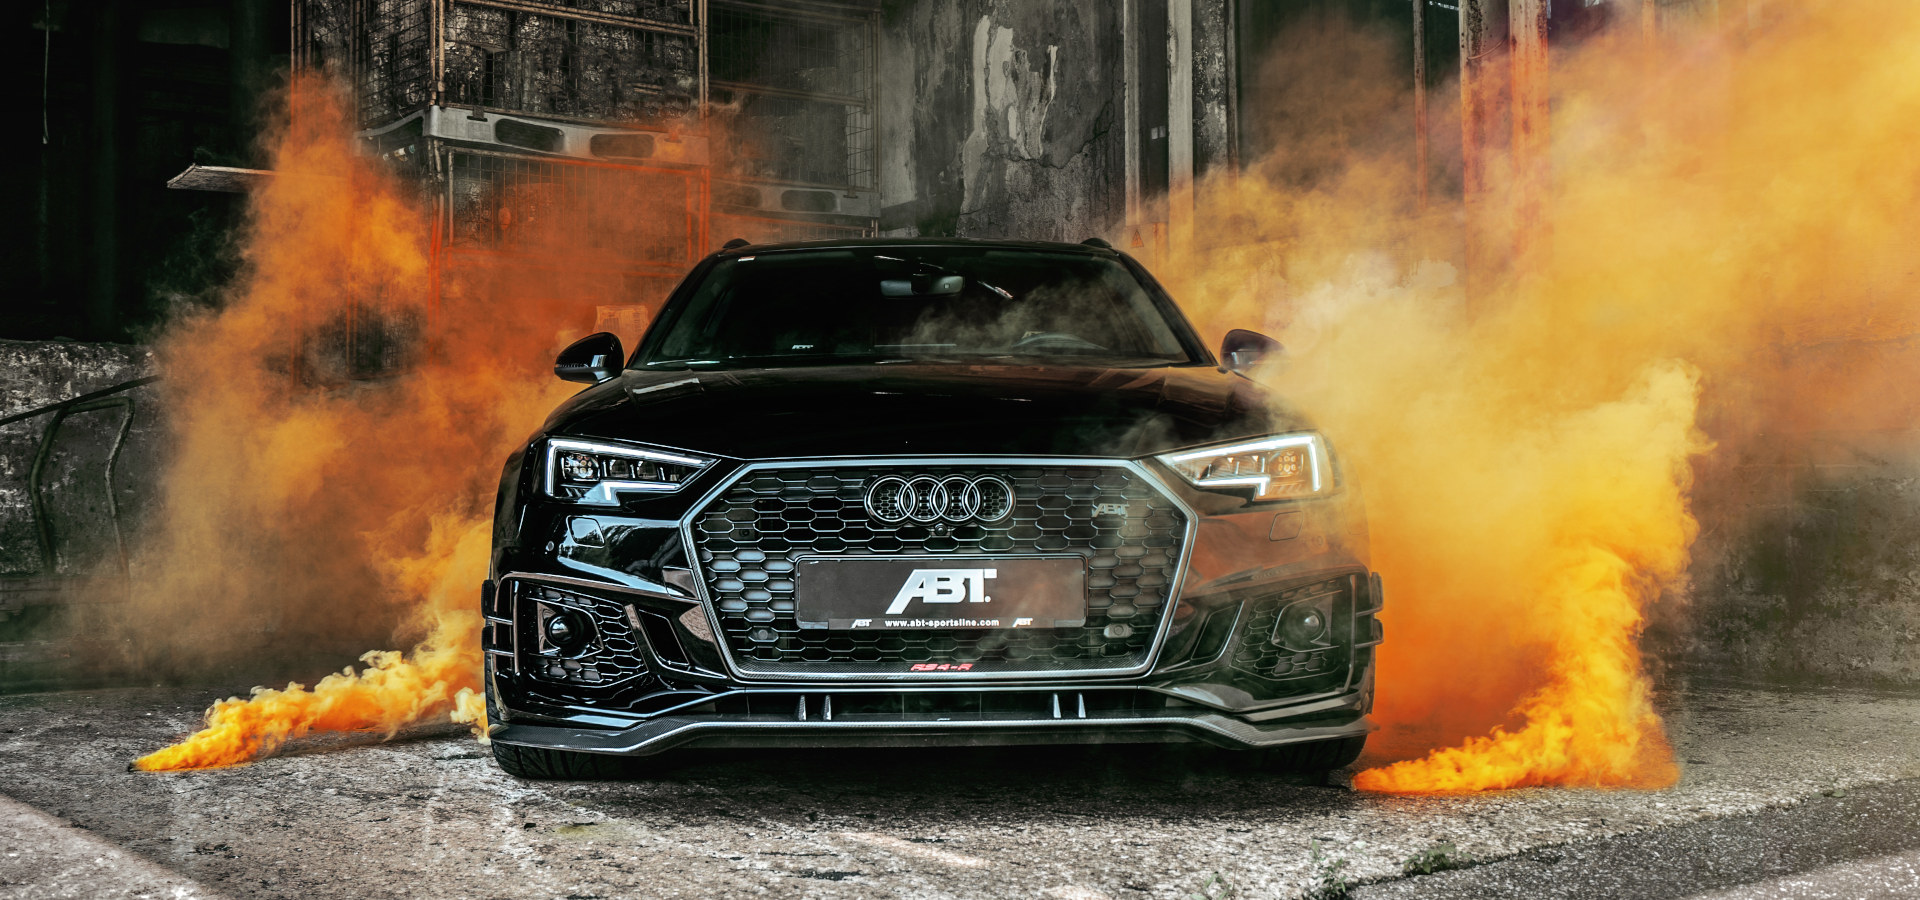 Audi TT - Audi Tuning, VW Tuning, Chiptuning von ABT Sportsline.